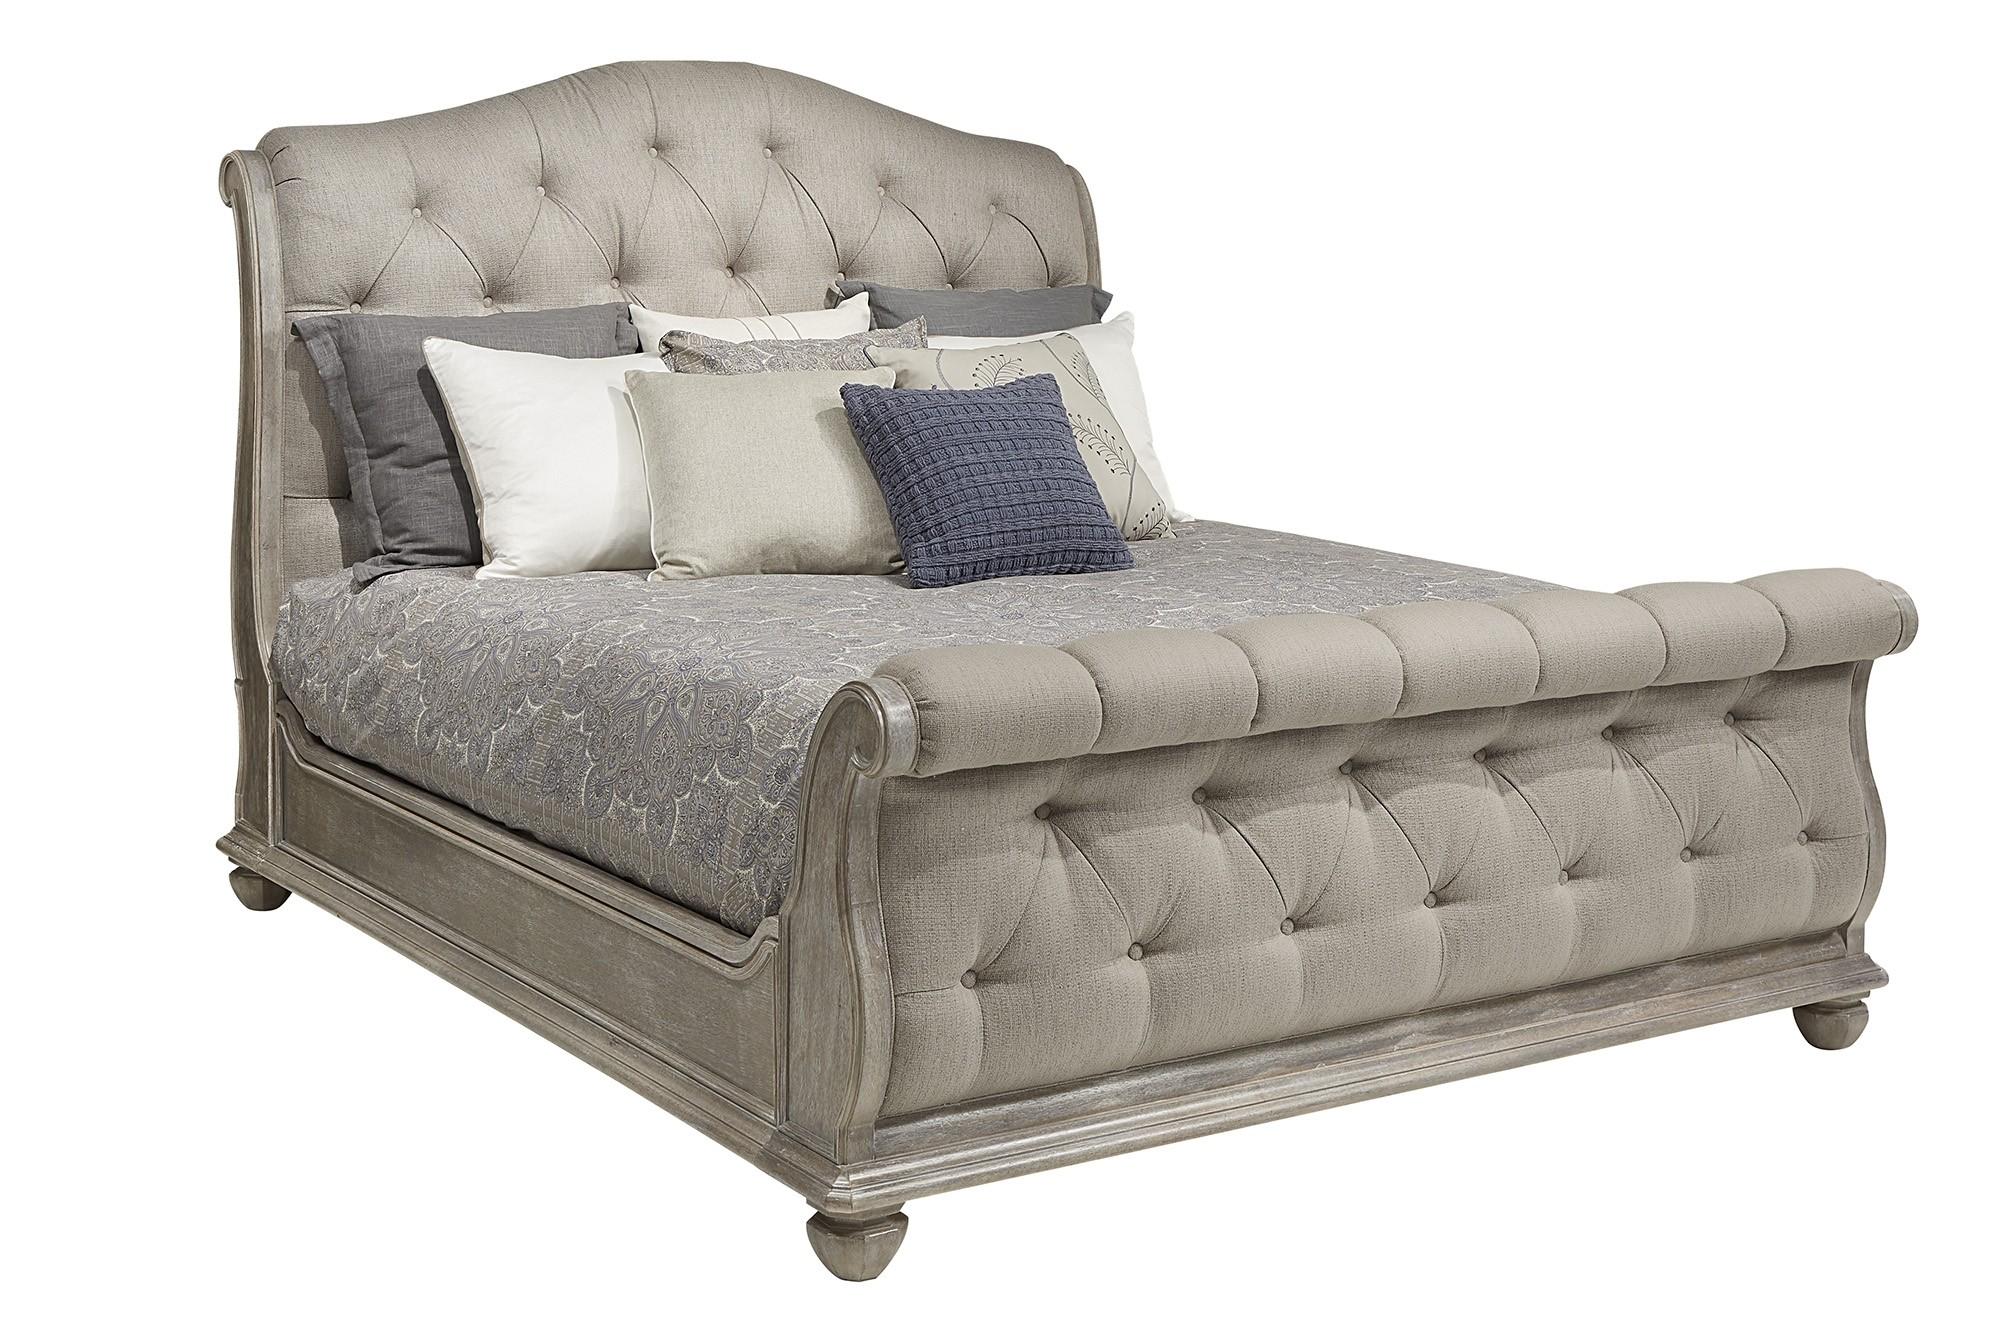 Homey Design Furniture HD-80005 Sleigh Bed